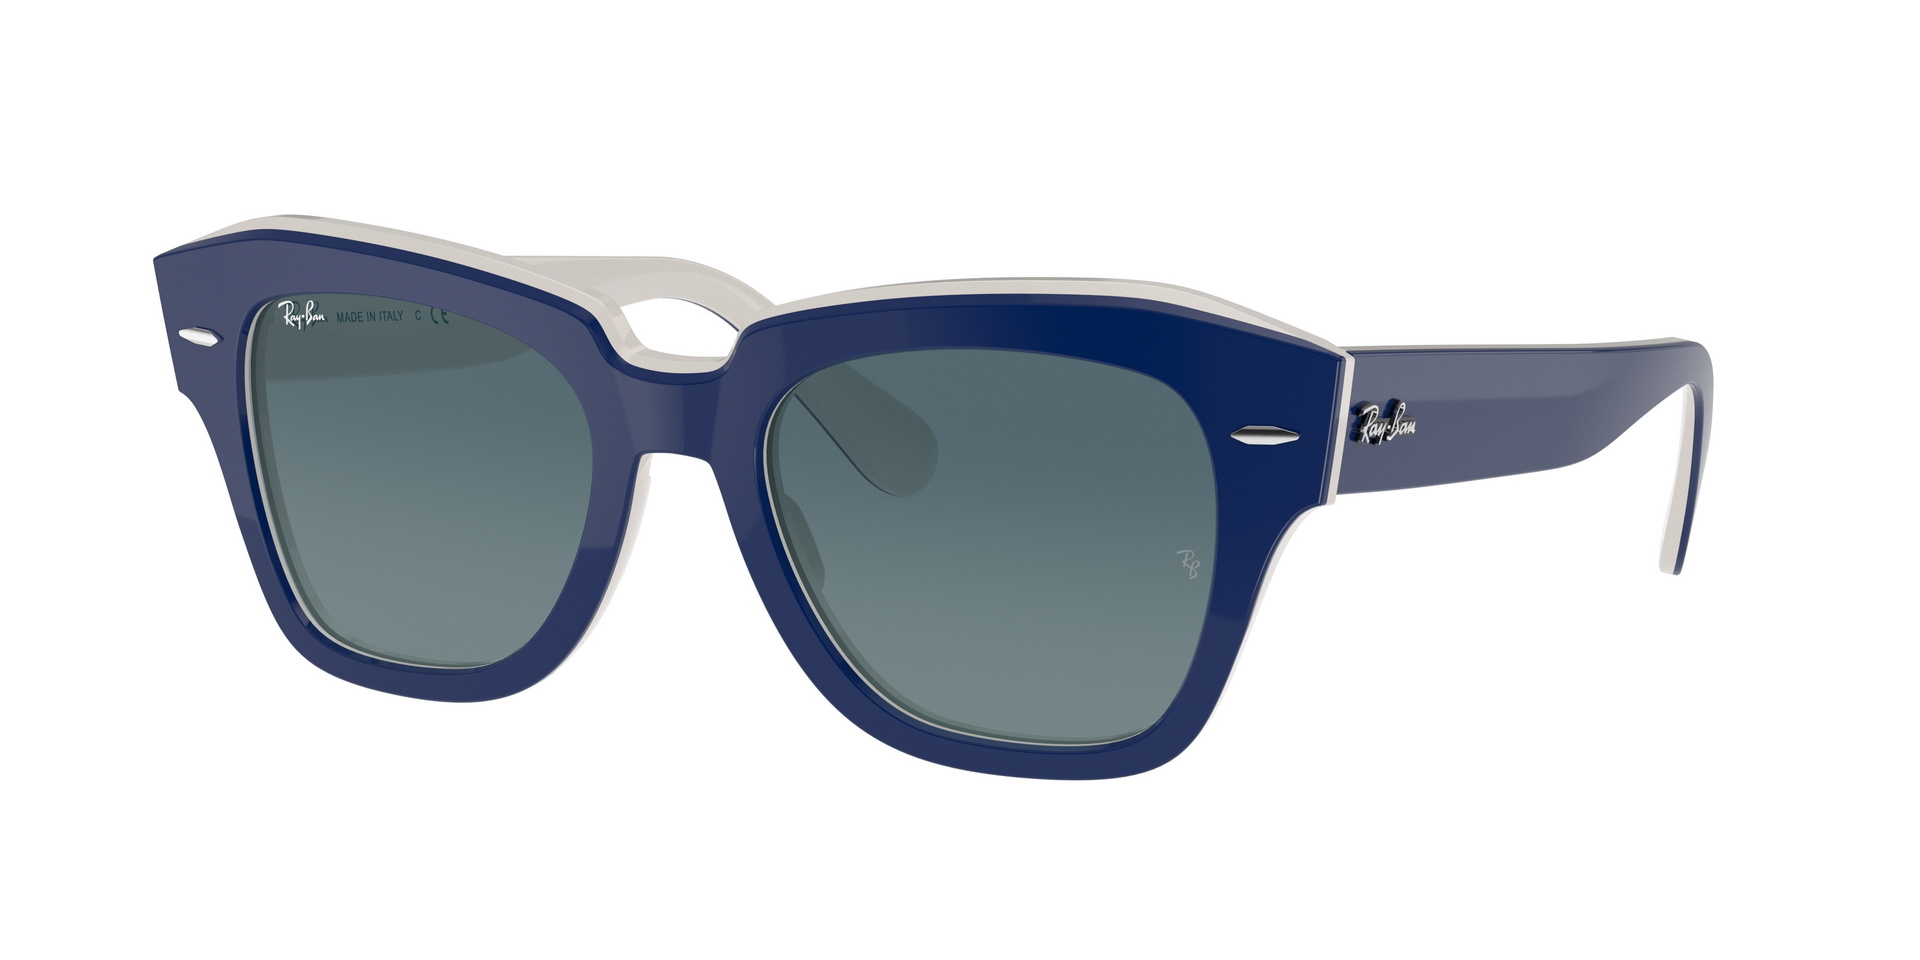 Update 201+ white ray ban sunglasses latest